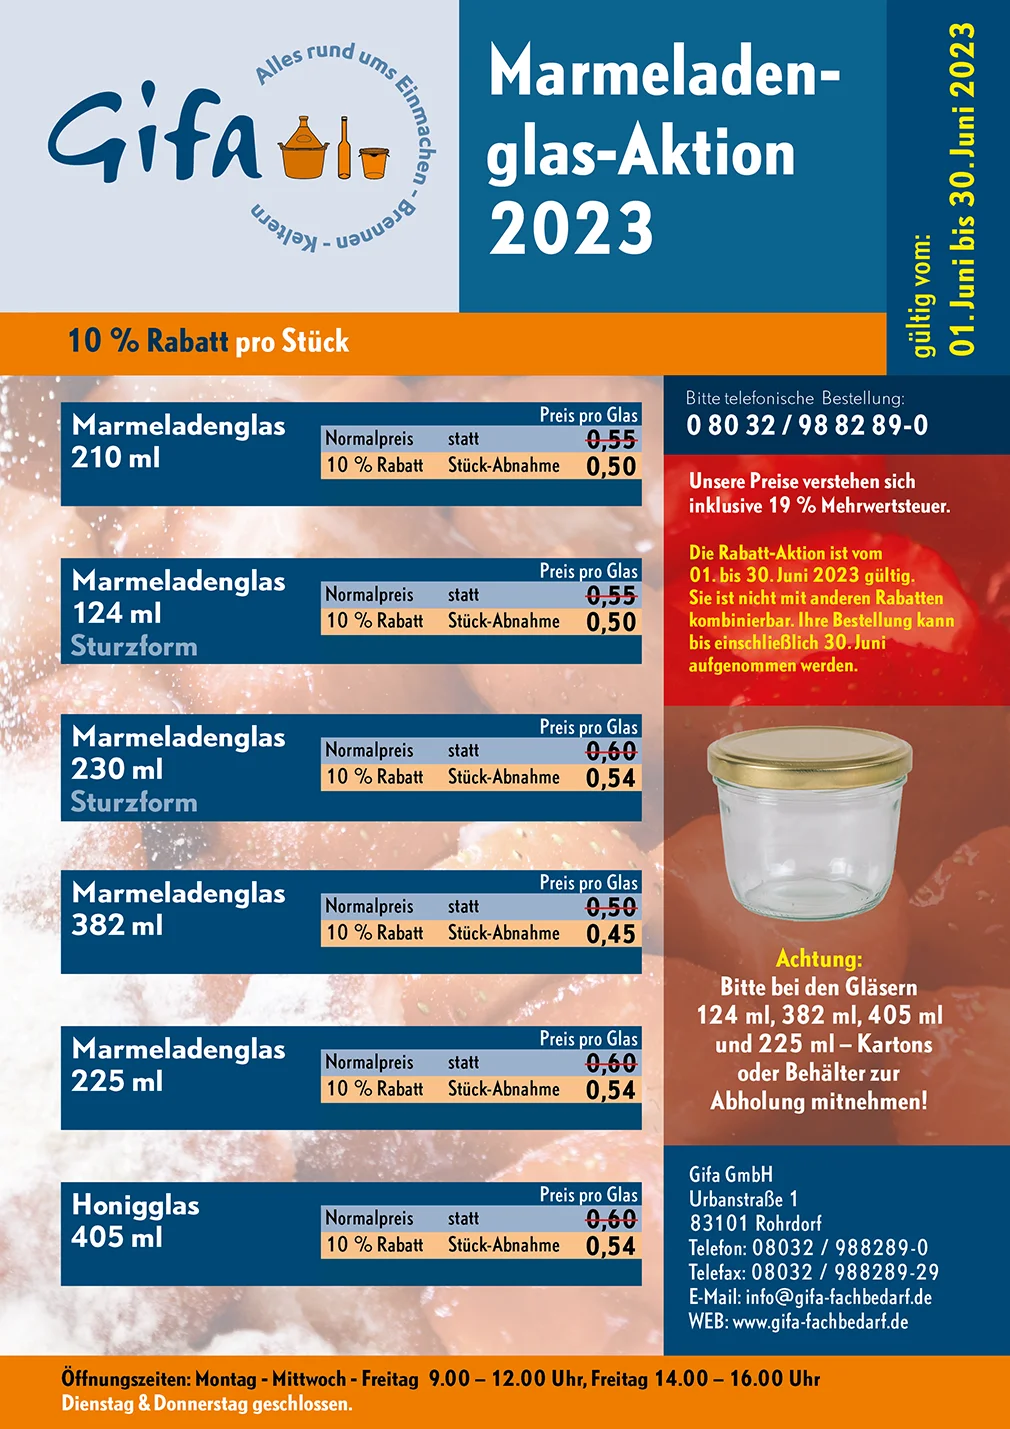 Angebotsblatt für Gifa Marmeladenglas-Aktion 2023